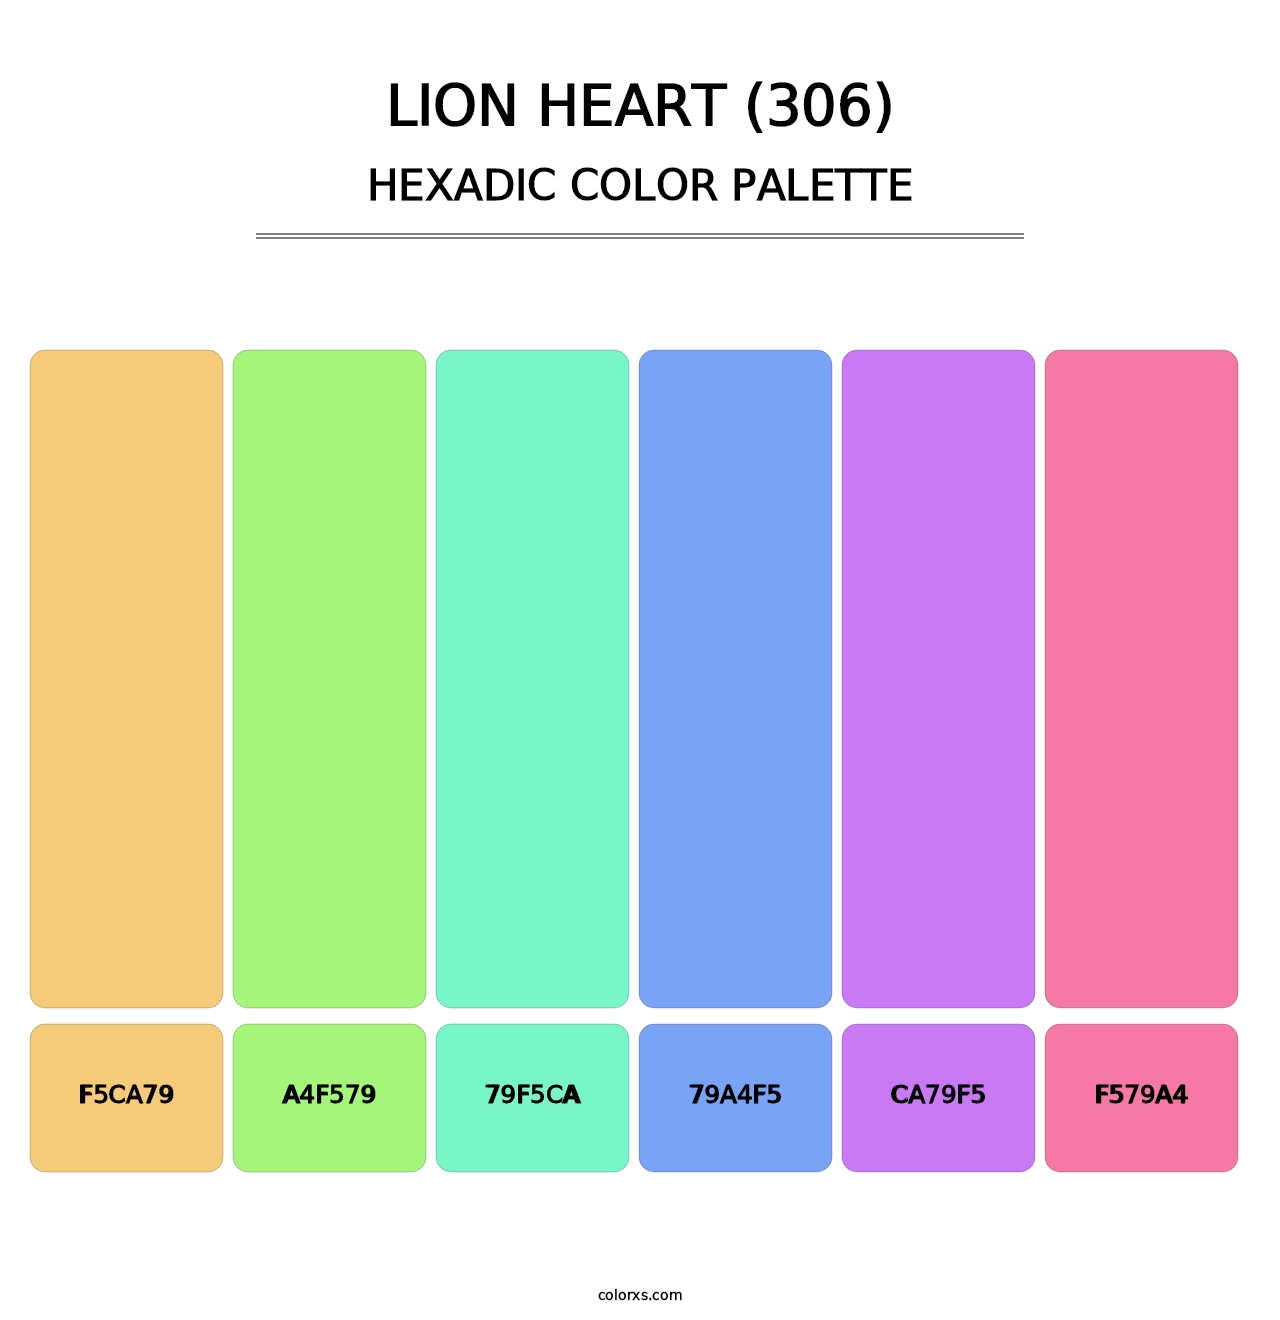 Lion Heart (306) - Hexadic Color Palette